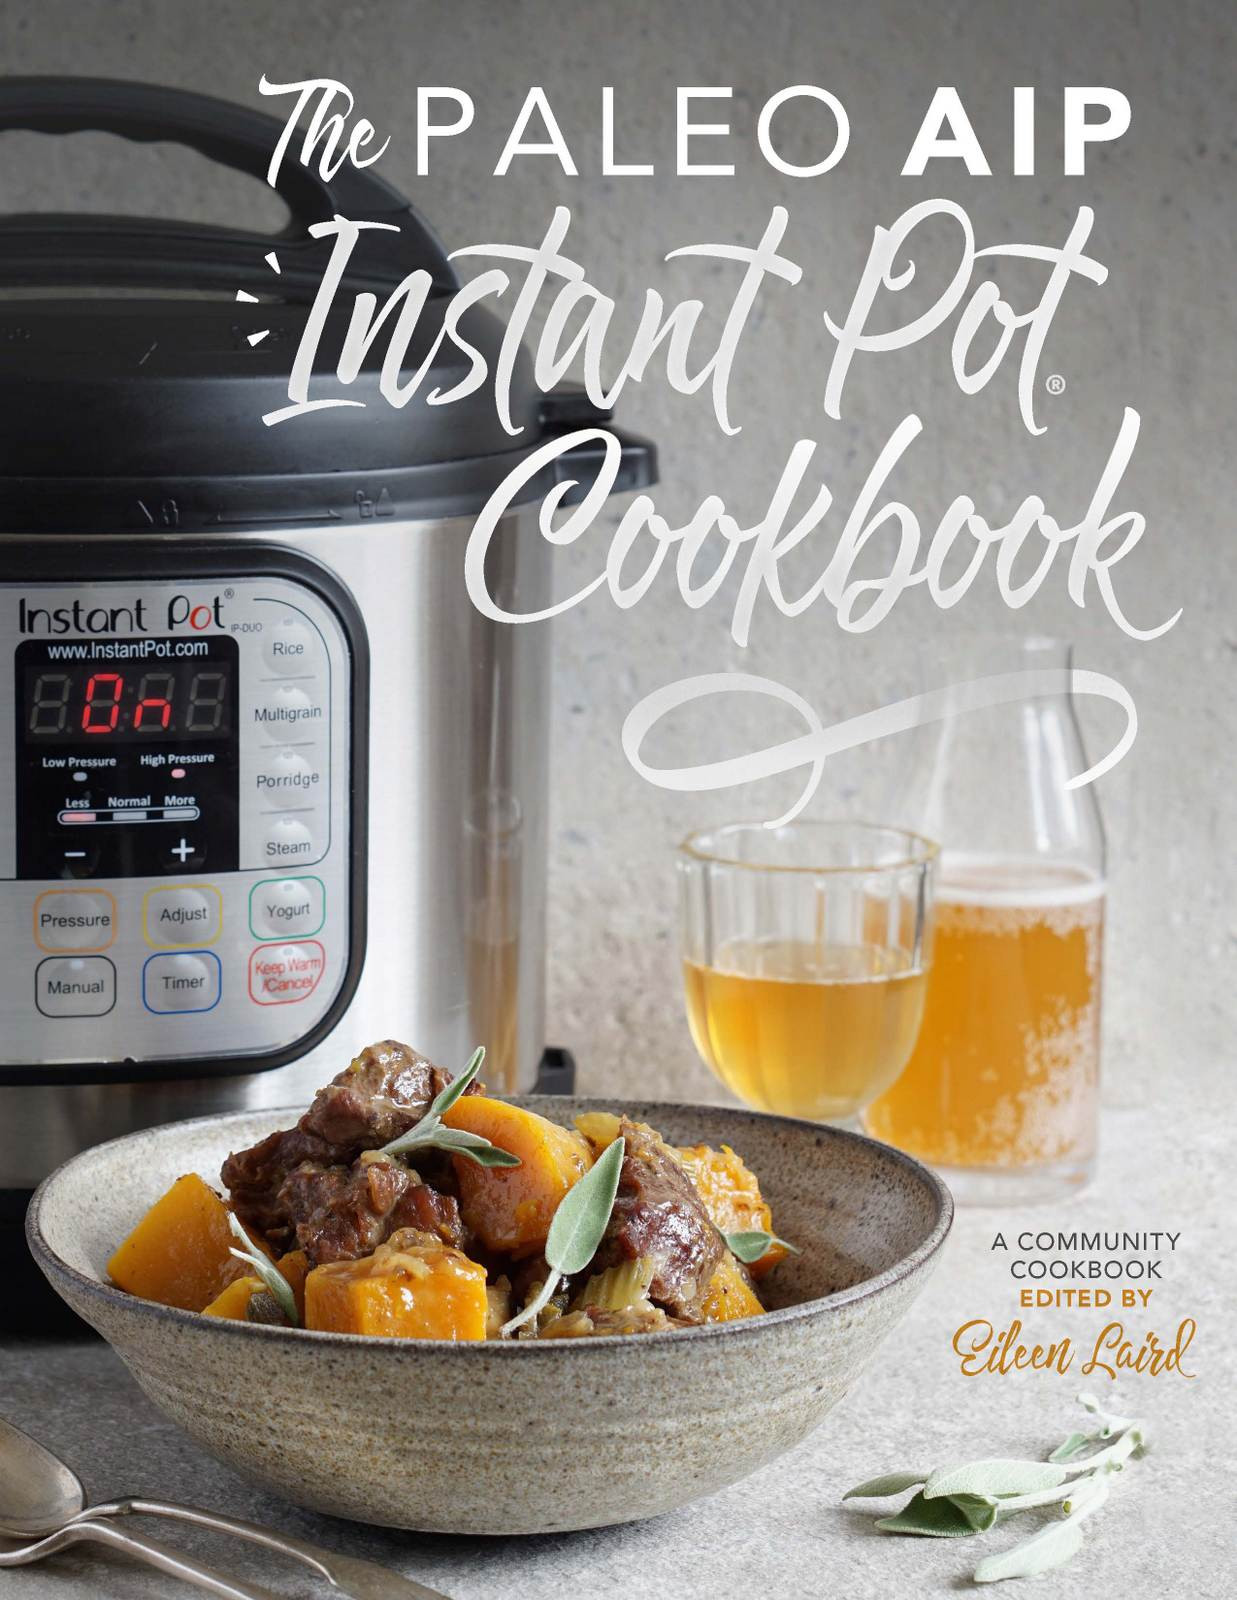 Paleo Instant Pot Recipes
 The Paleo AIP Instant Pot Cookbook